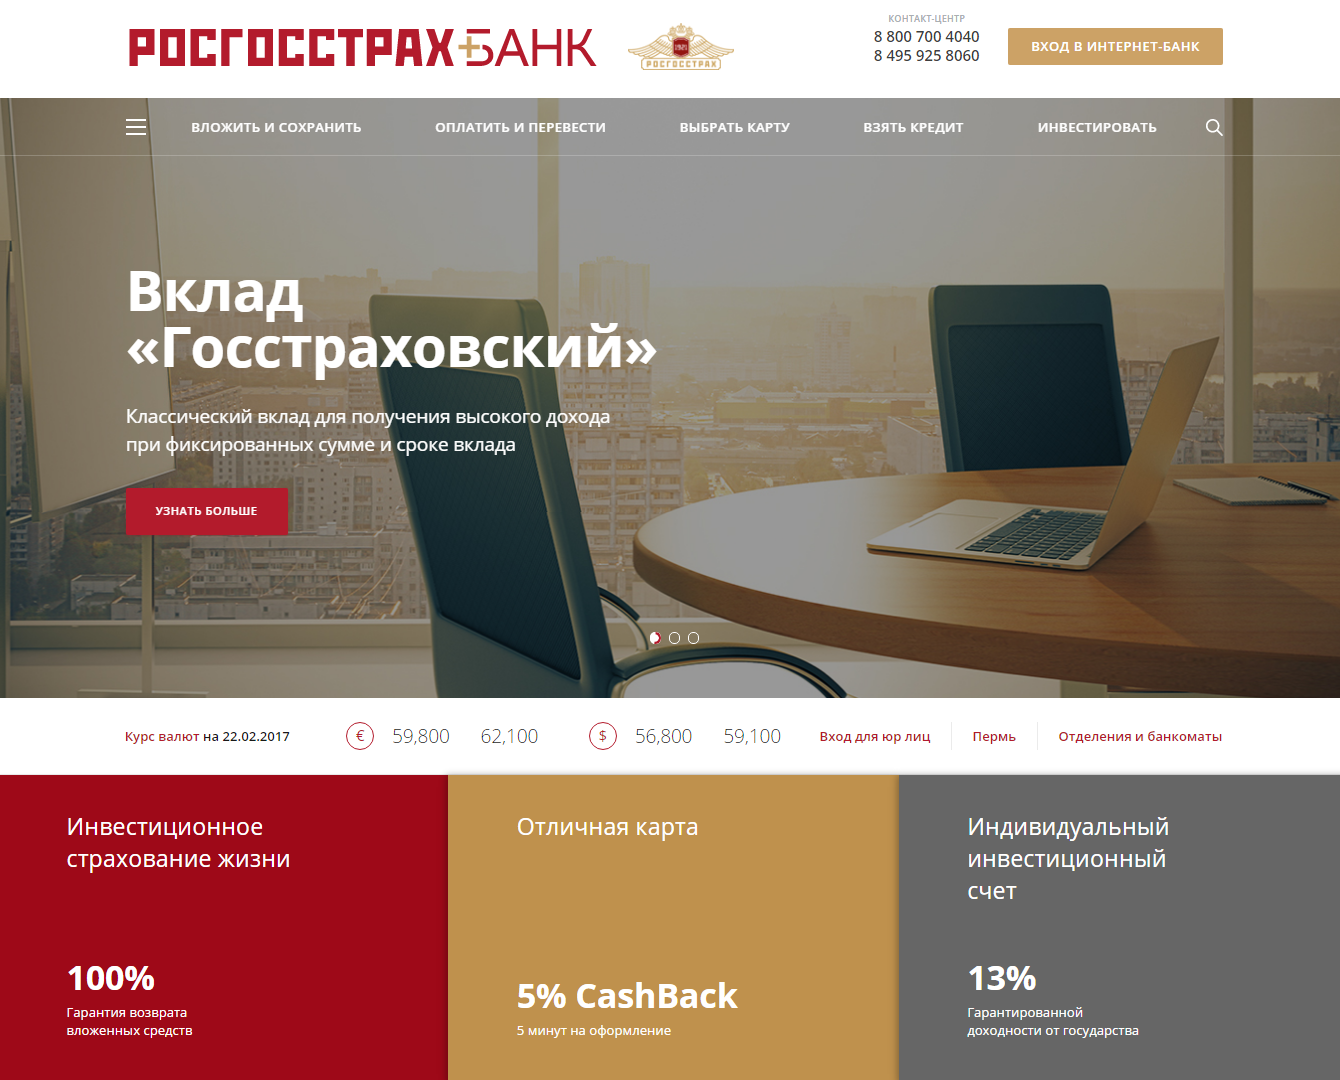 русфинанс банк подать заявку онлайн